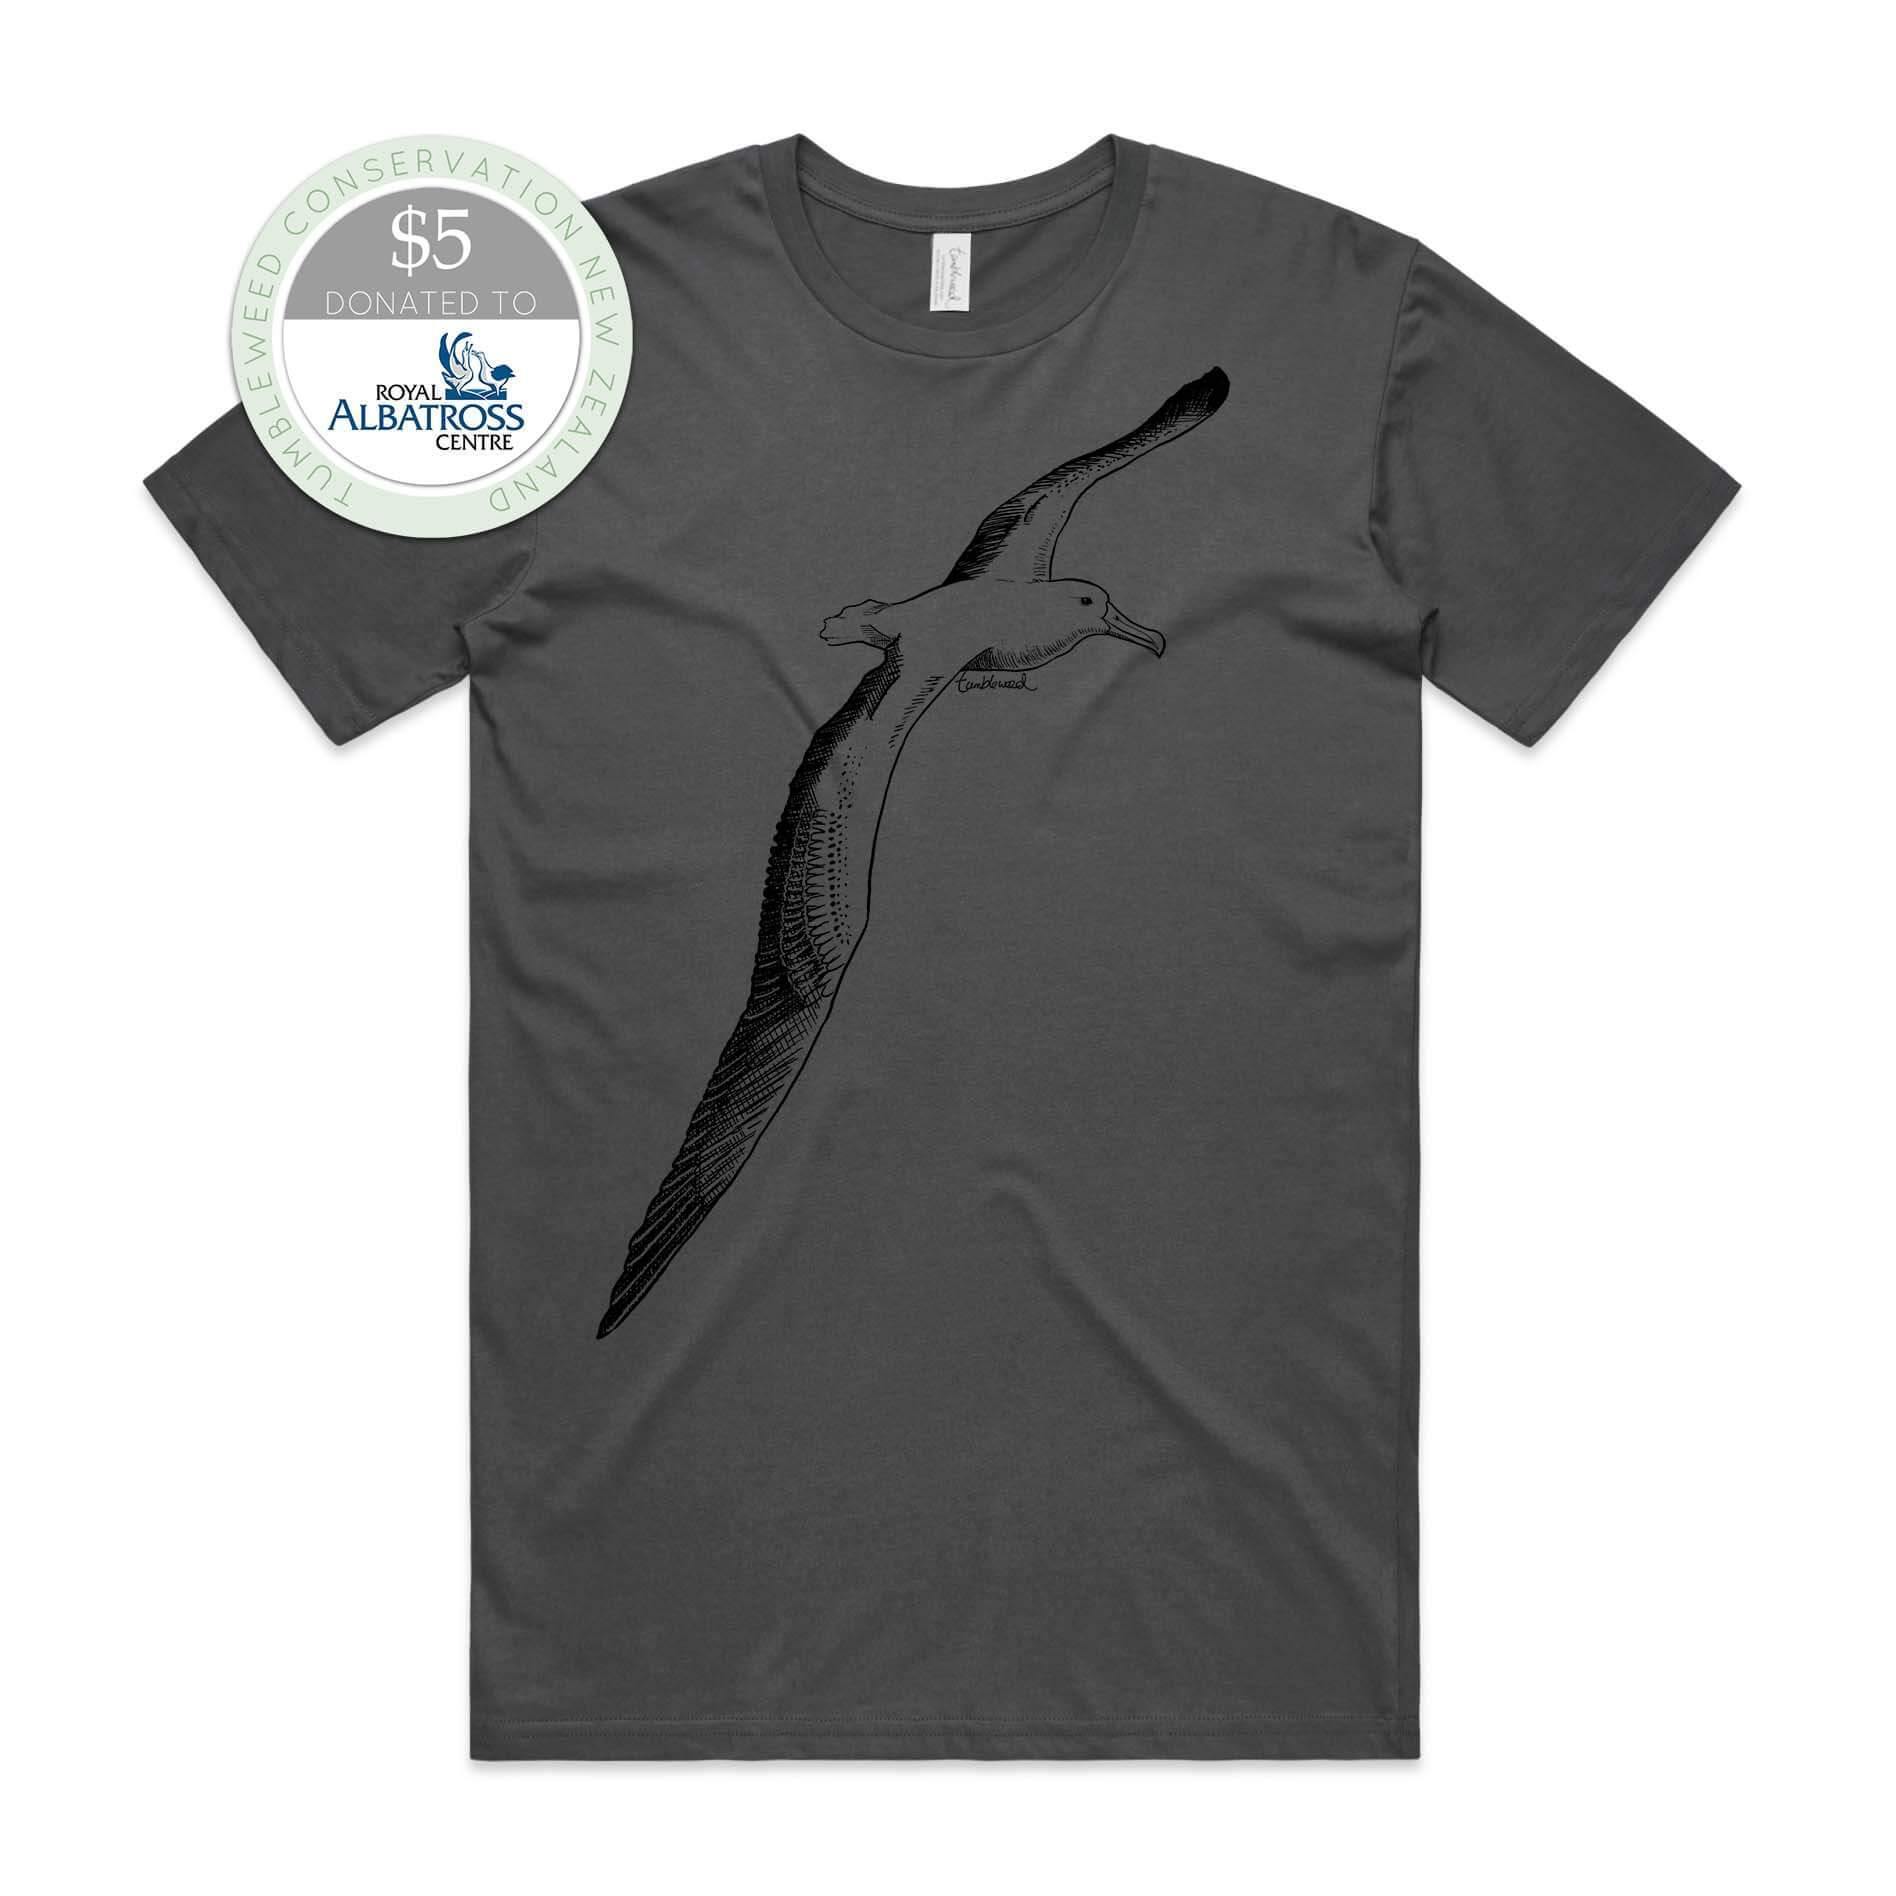 Charcoal, male t-shirt featuring a screen printed albatross design.